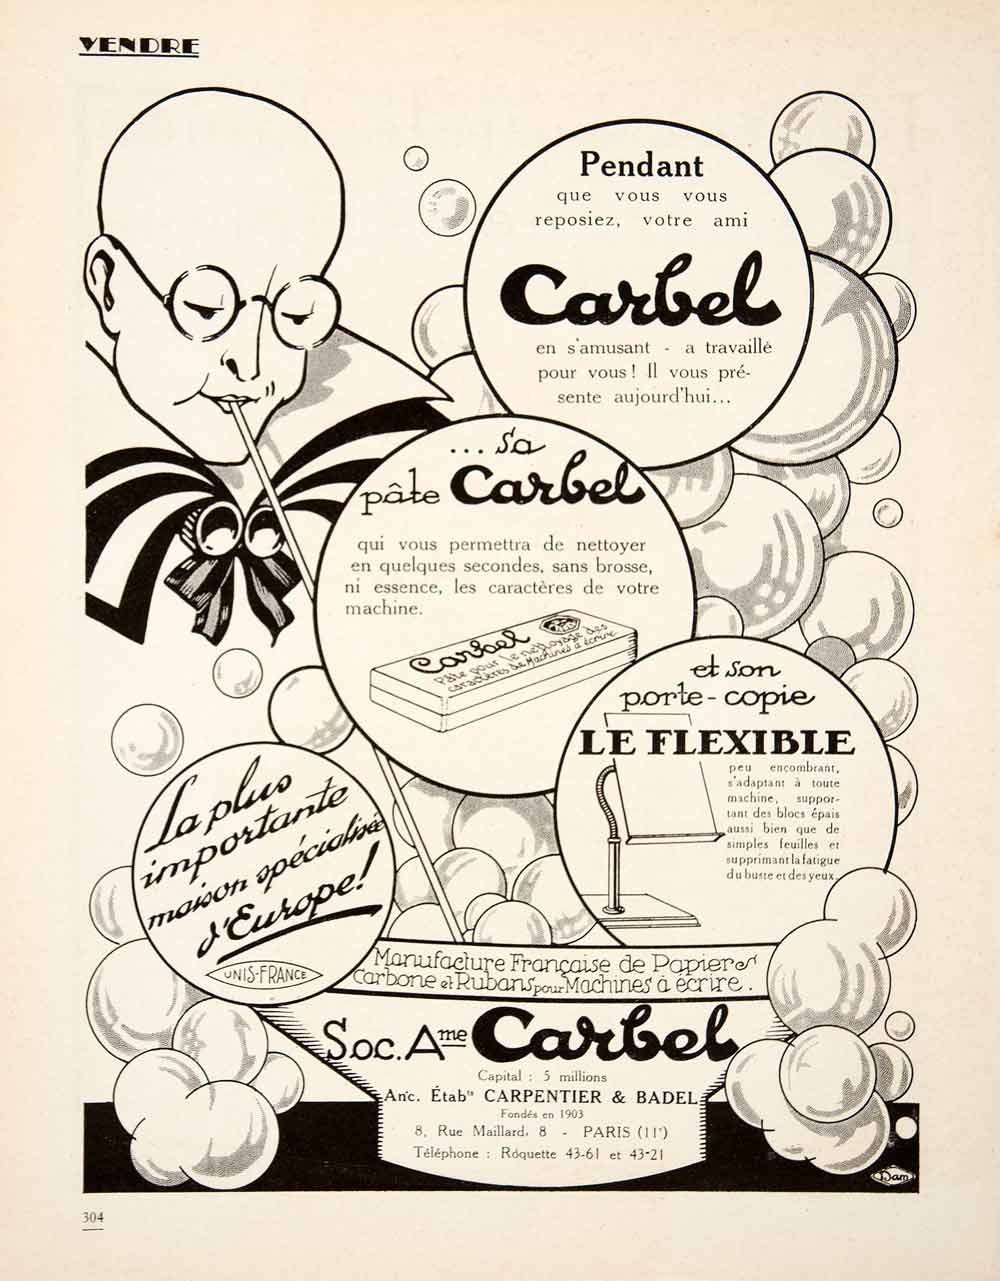 1925 Ad Carbel 0 Rue Maillard Unis France Typewriter Cleaner Carbon Ribbon VEN4